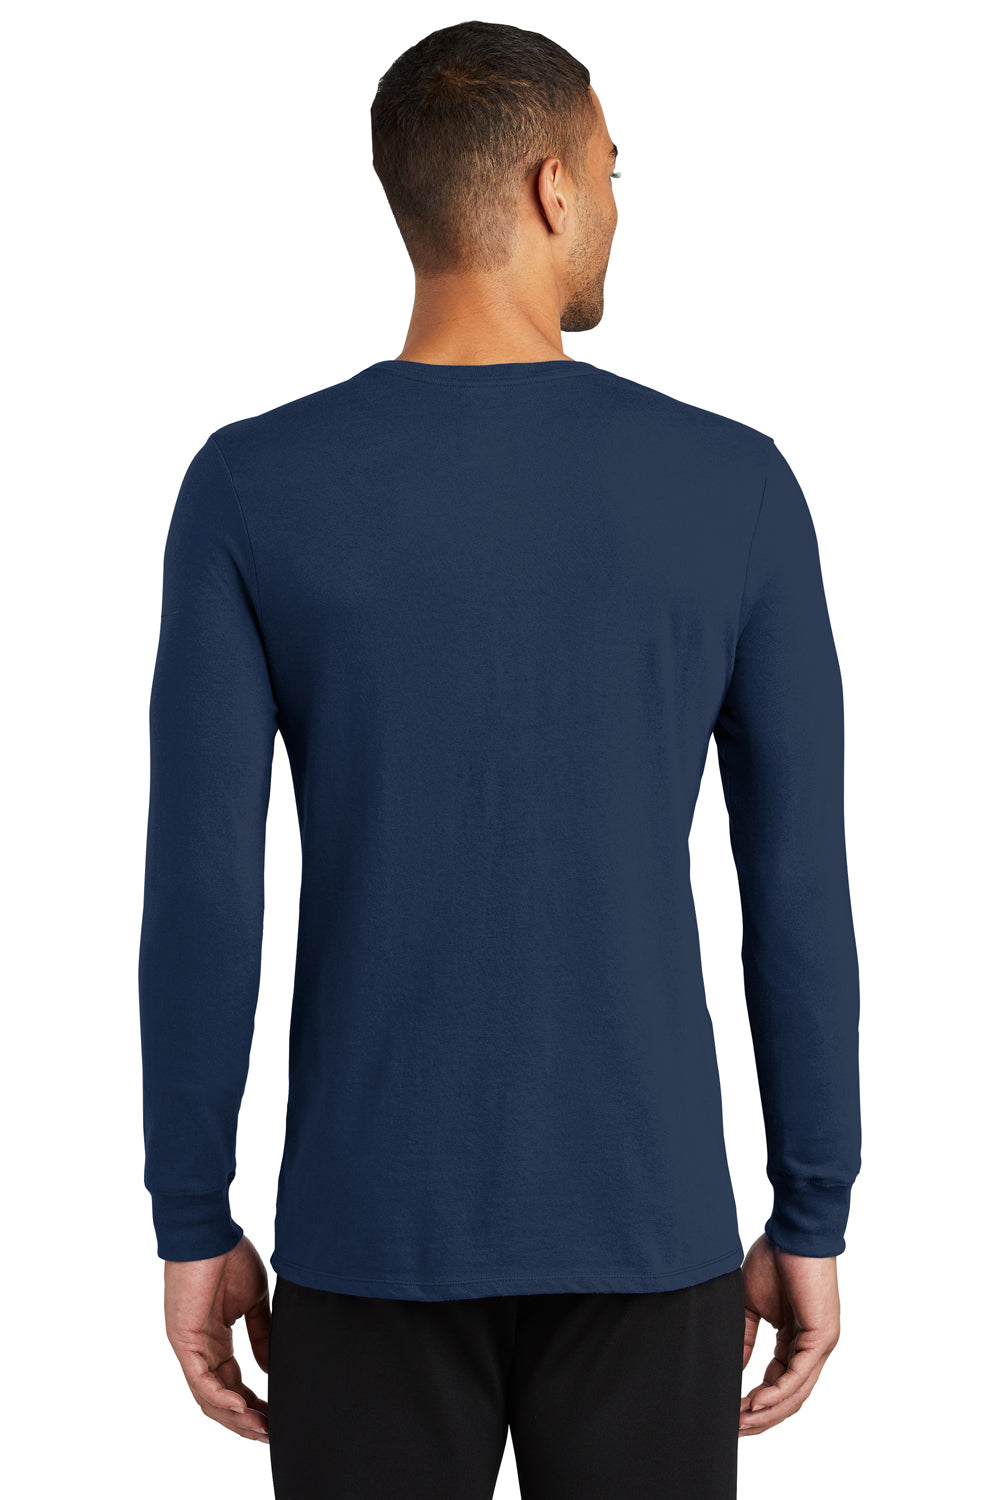 Nike NKBQ5230 Mens Dri-Fit Moisture Wicking Long Sleeve Crewneck T-Shirt College Navy Blue Model Back